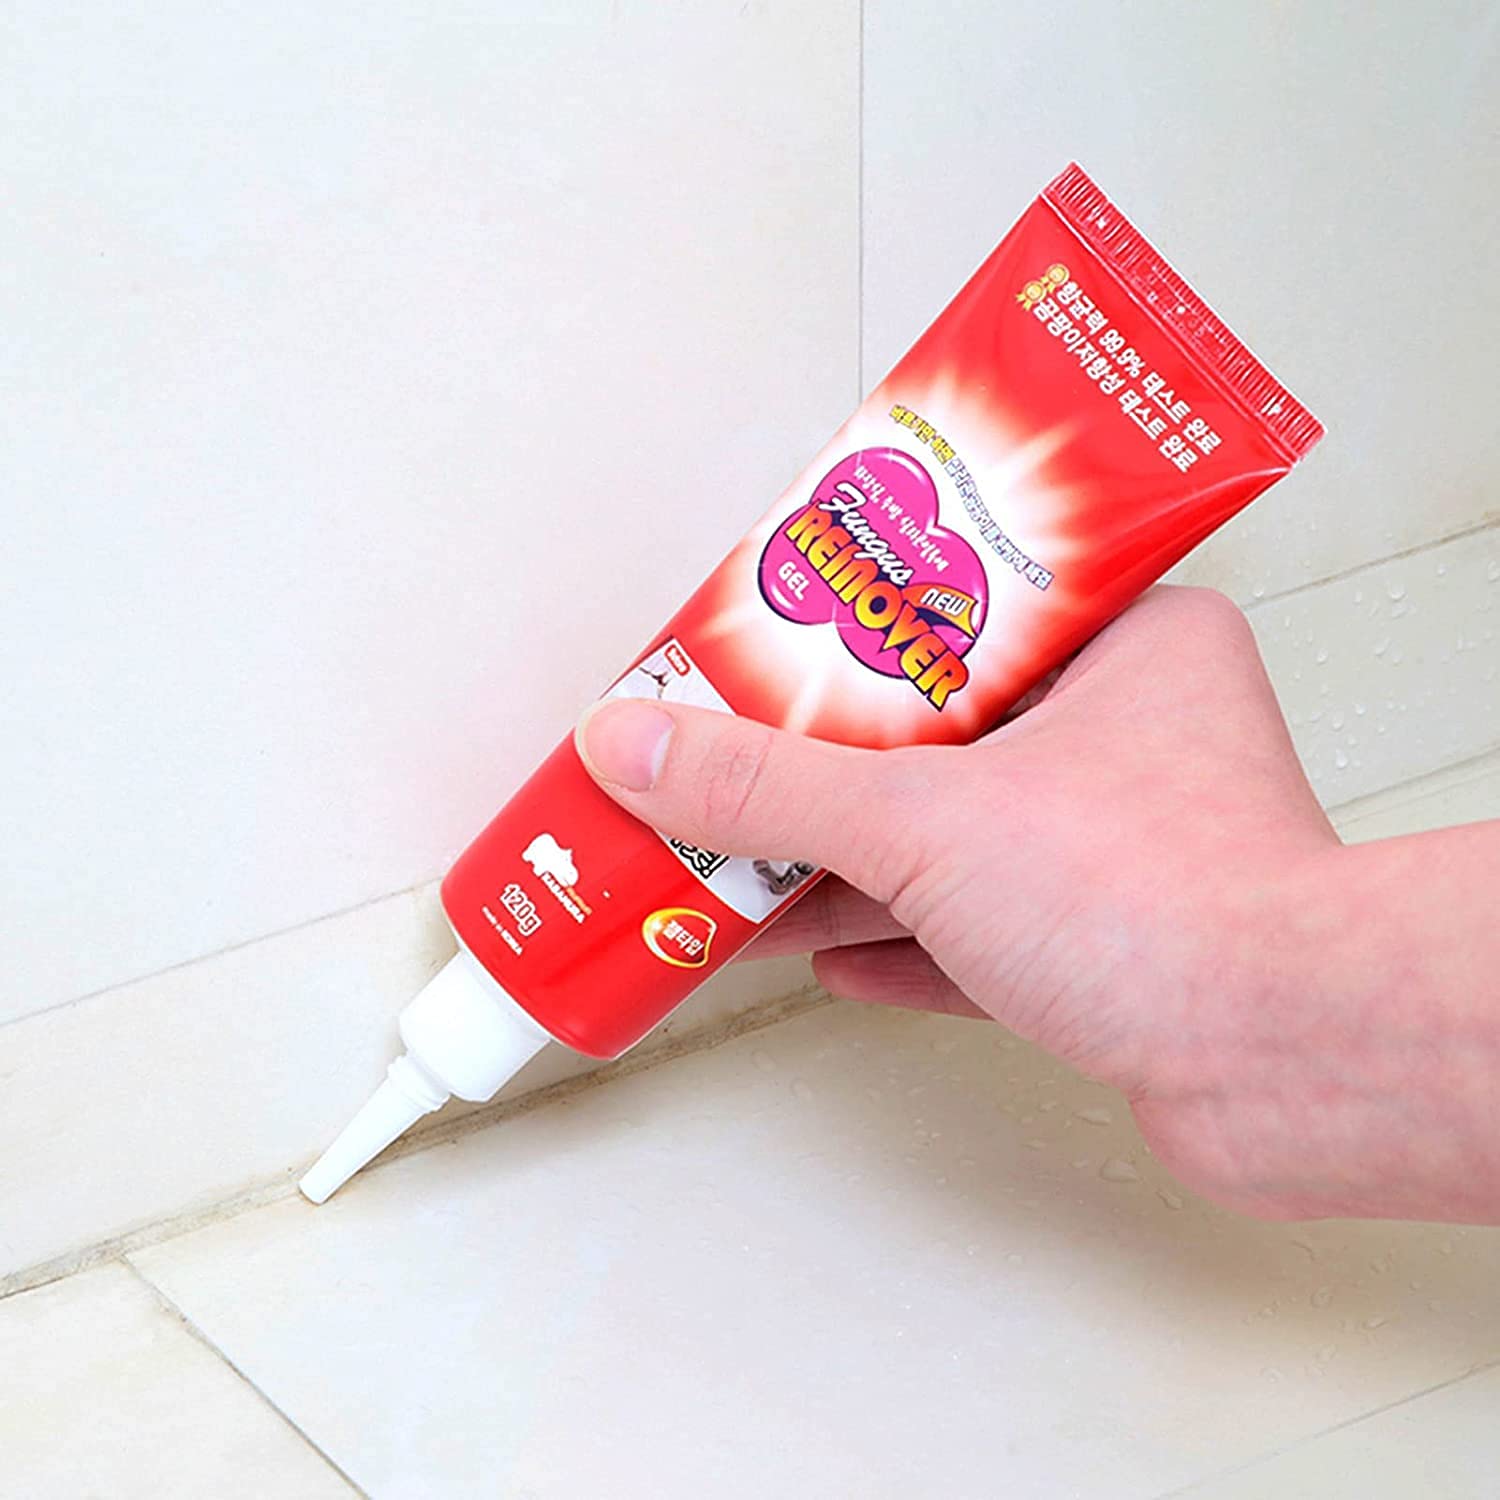 MXY Household Bathroom Black Spot Remover for Bathtub Shower Tile Caulk Washing Machine Rubber Ring 2 units